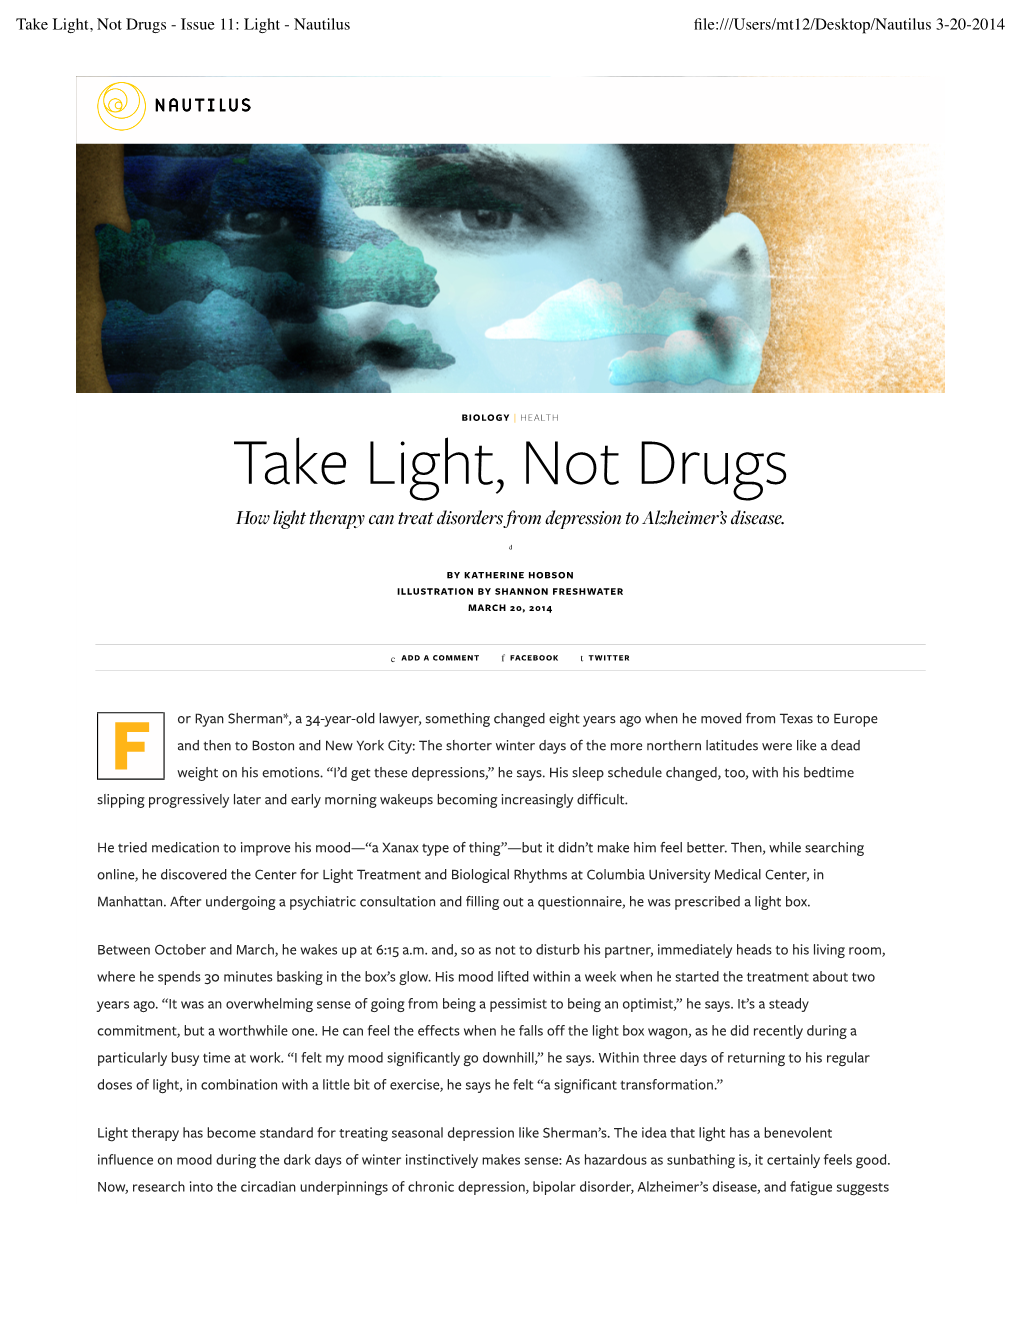 Take Light, Not Drugs - Issue 11: Light - Nautilus ﬁle:///Users/Mt12/Desktop/Nautilus 3-20-2014